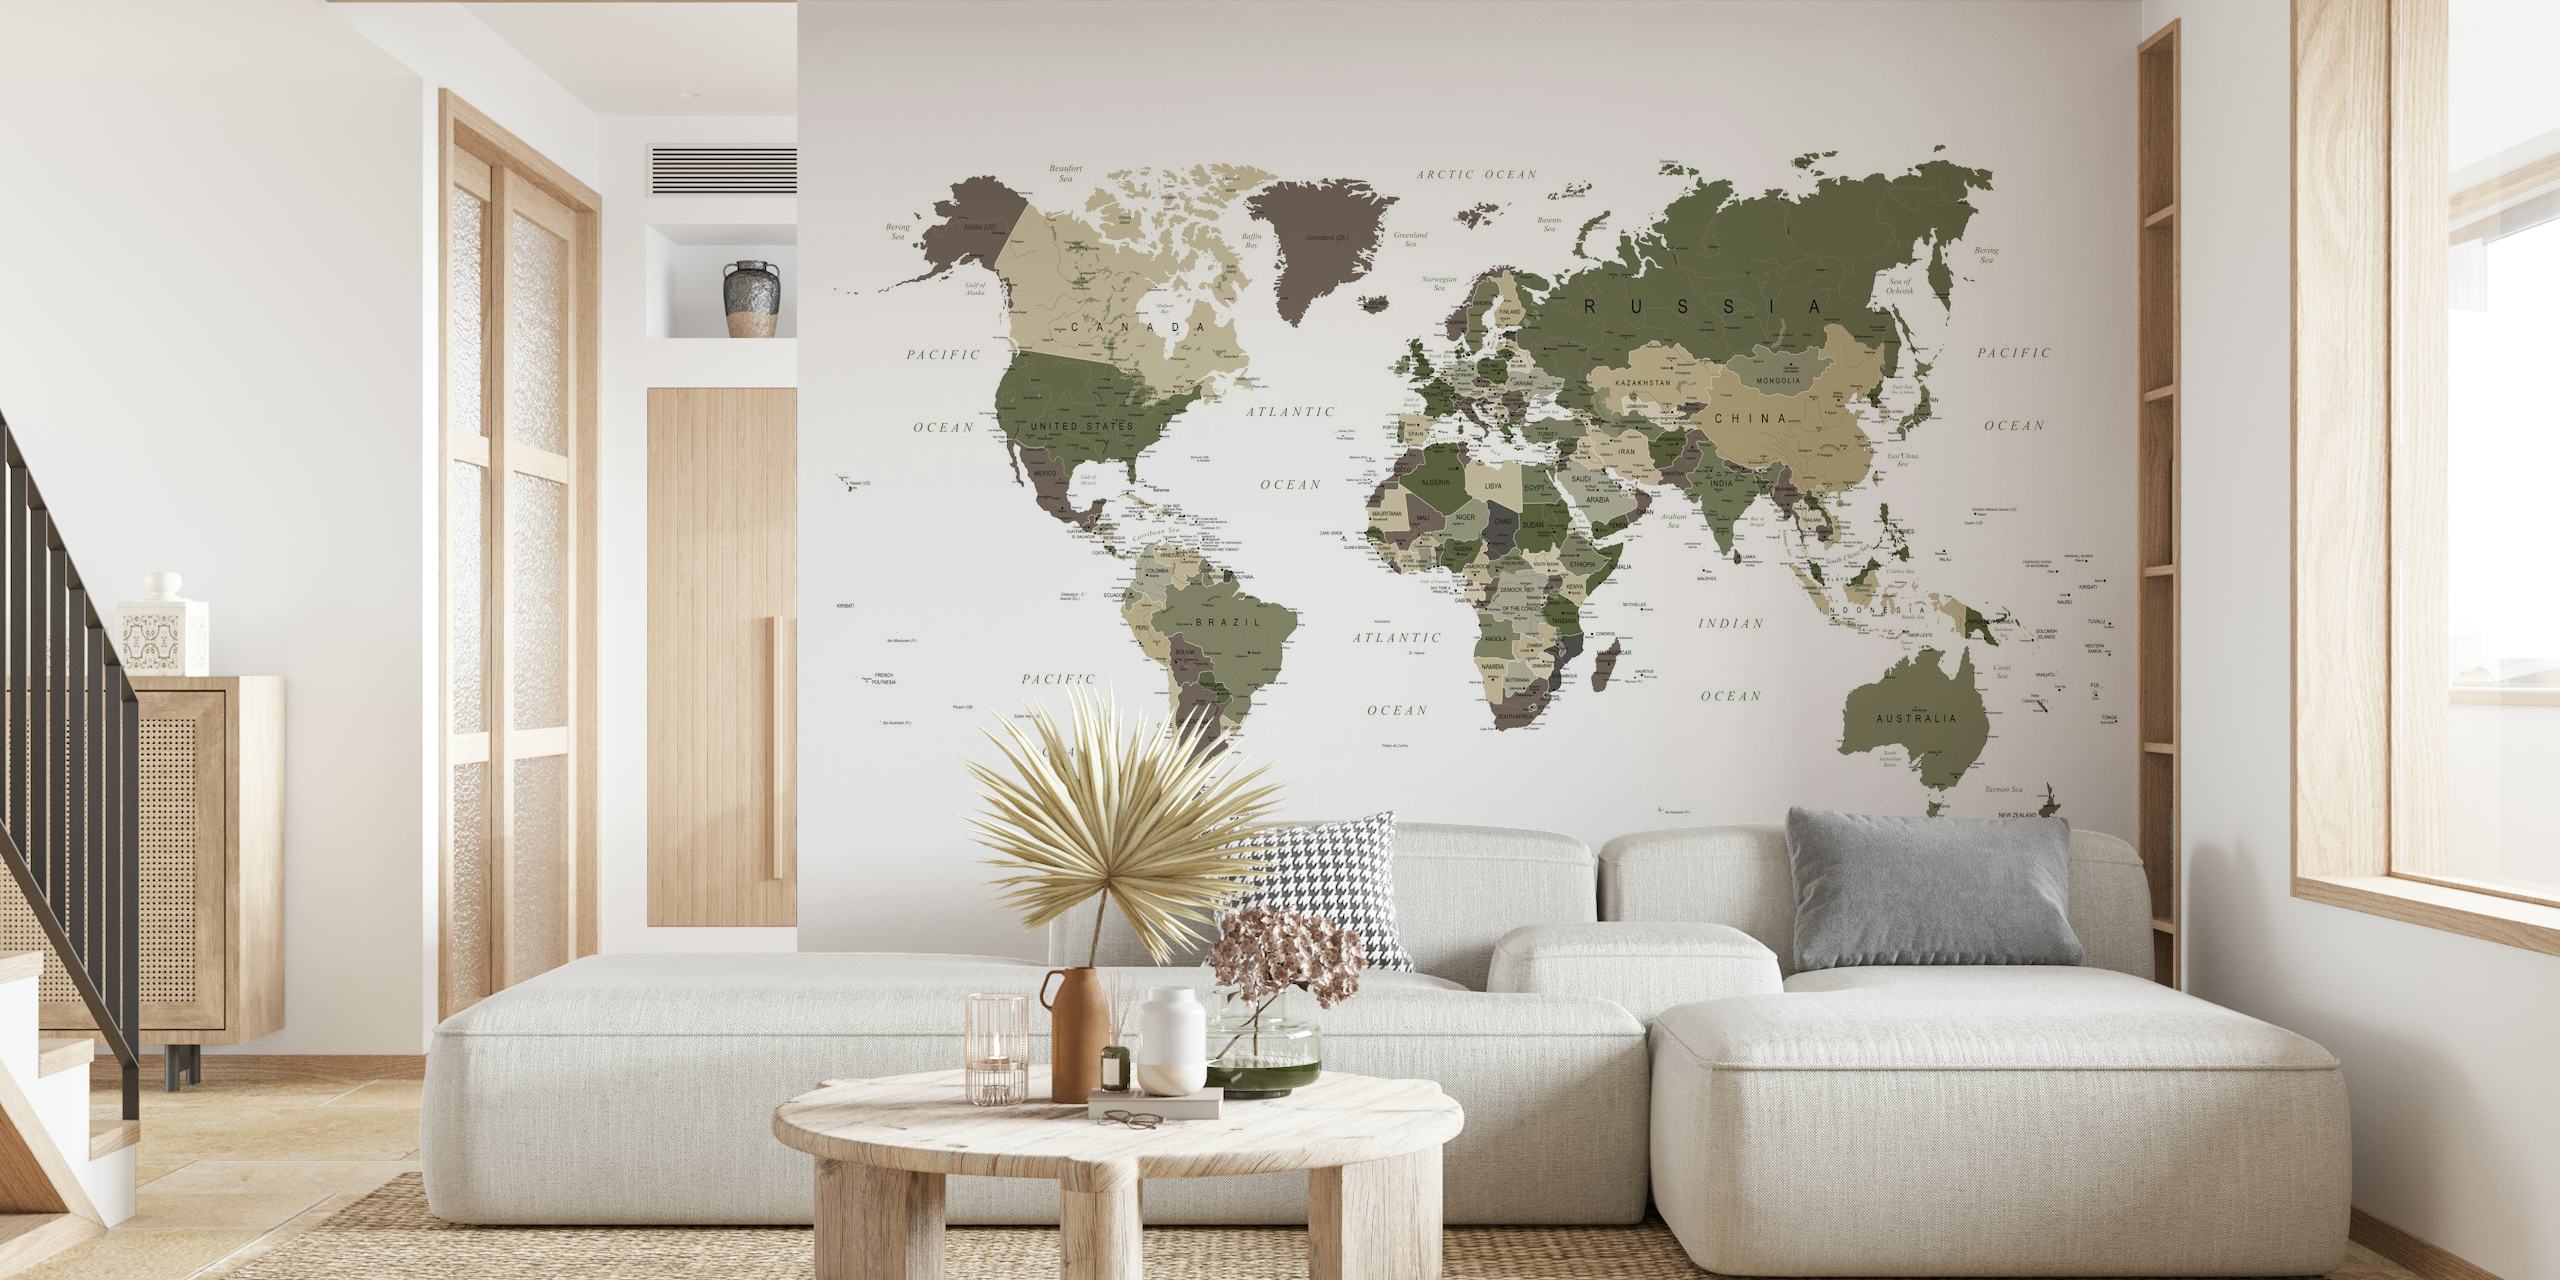 World Map Camouflage papel pintado